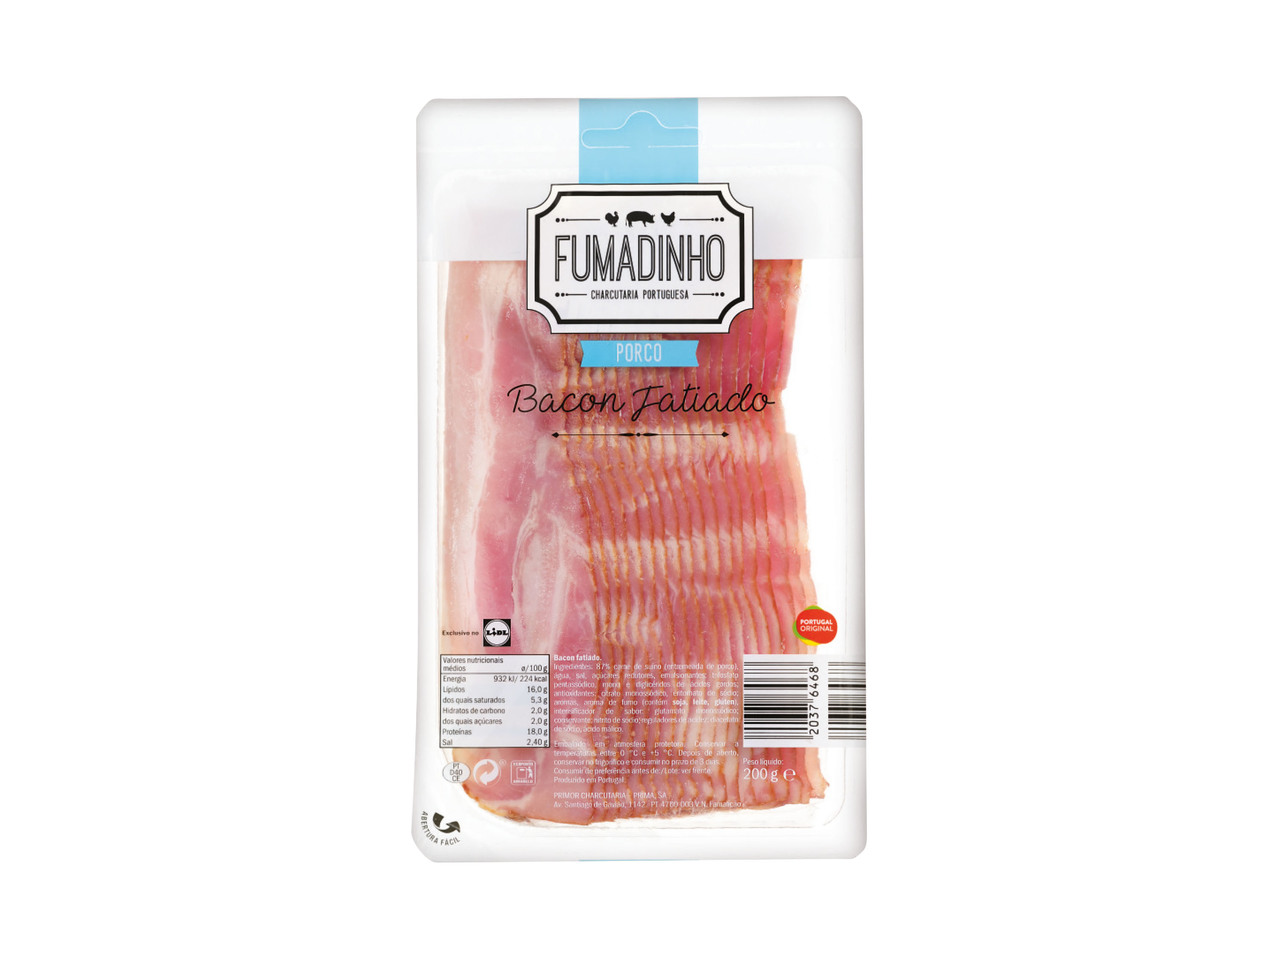 FUMADINHO(R) Bacon Fatiado